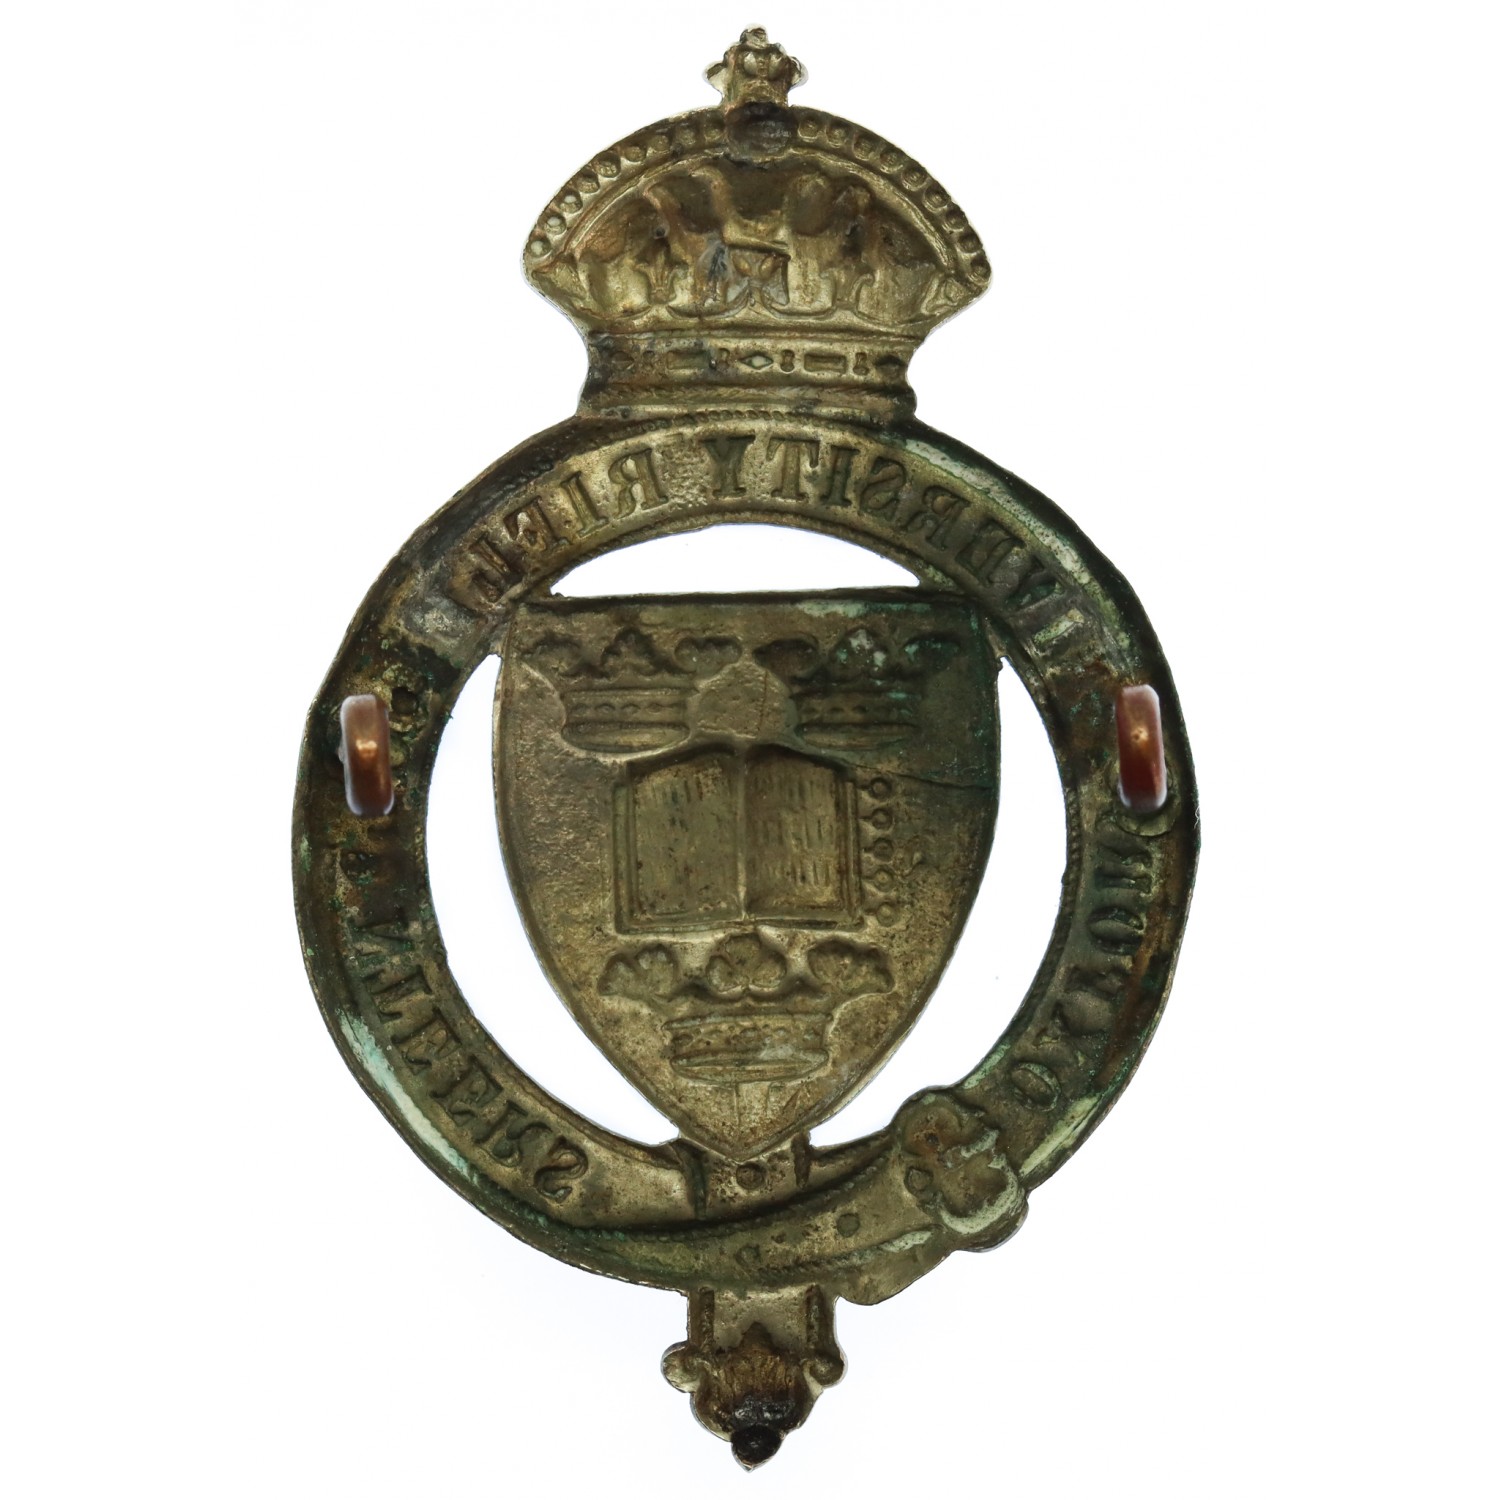 Oxford University Rifle Volunteers Glengarry Badge